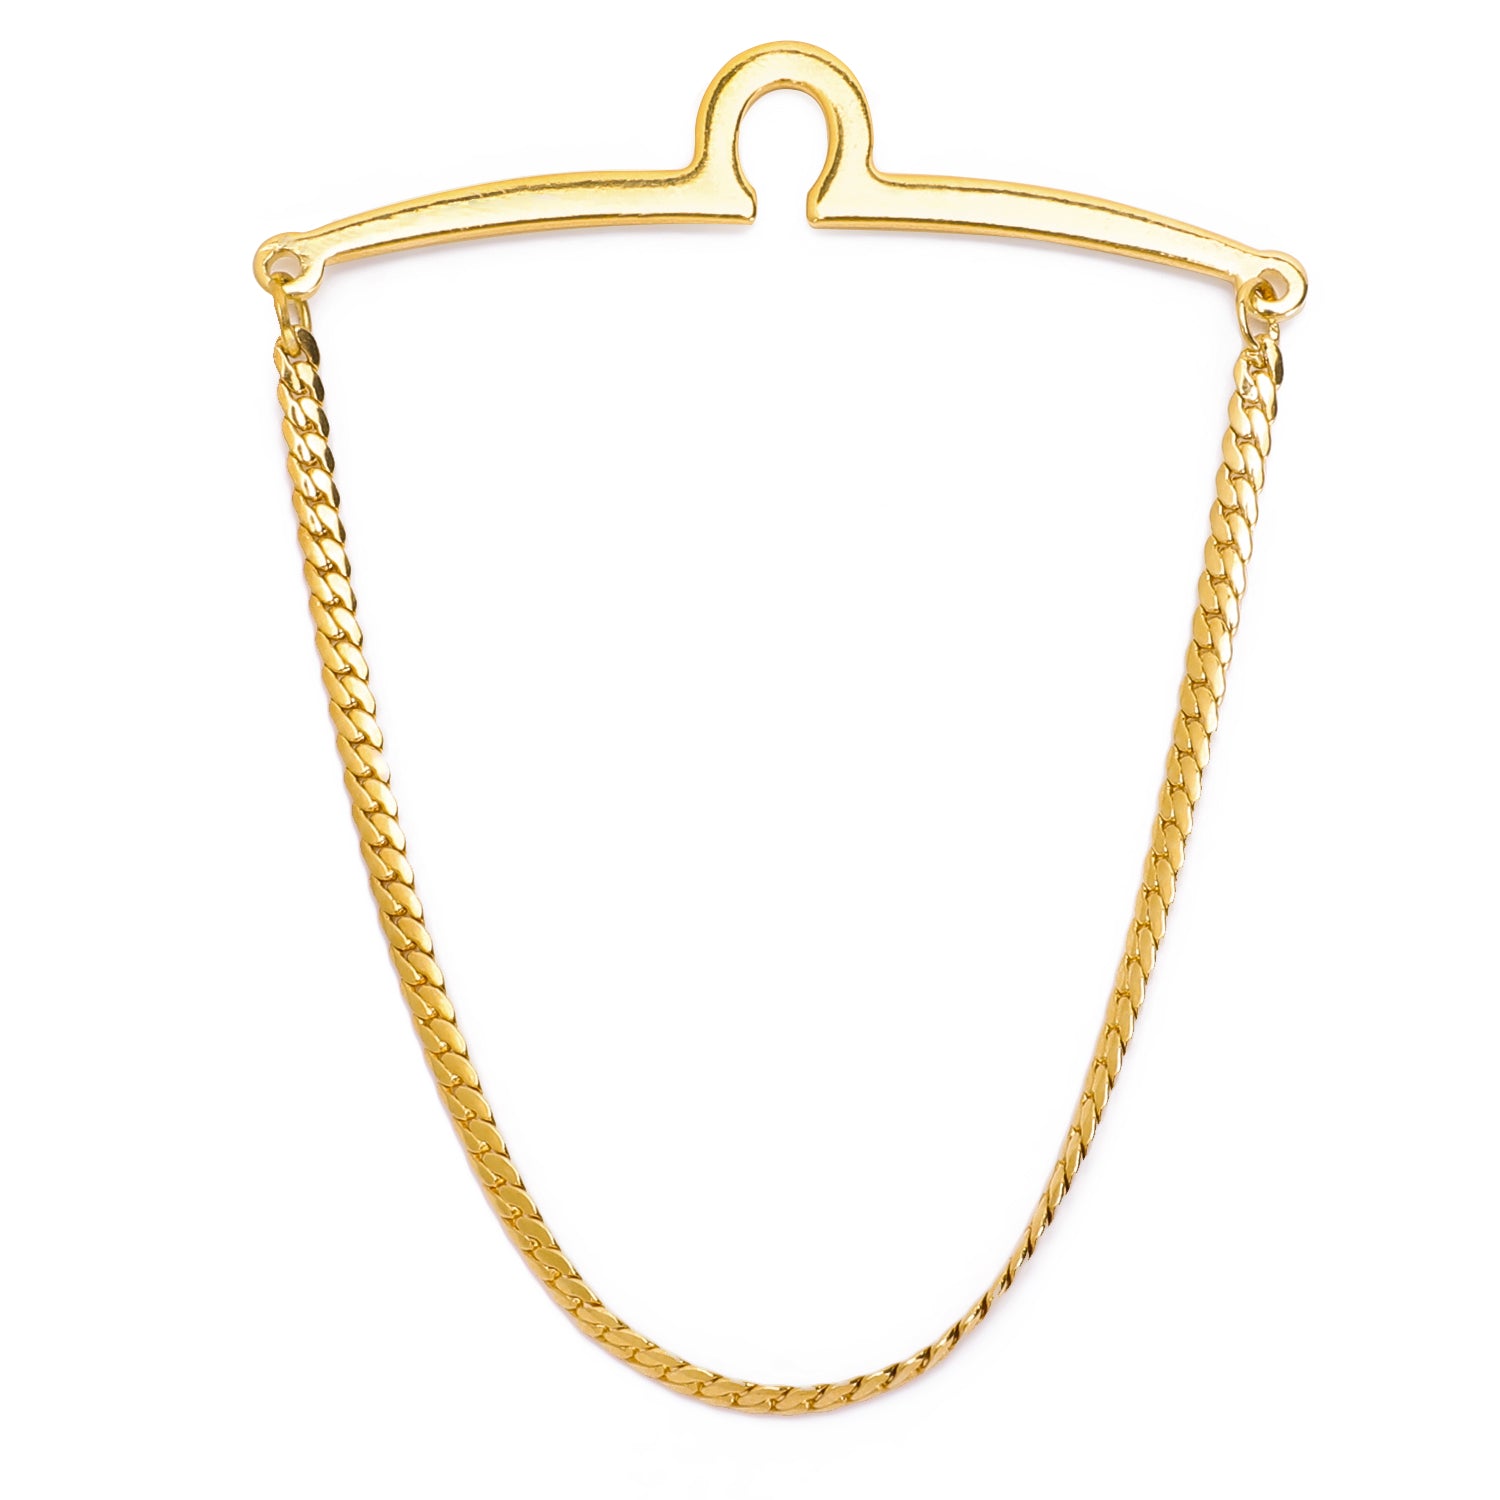 Pop Red Houndstooth Tie Pocket Square Cufflinks Set With Golden Chain